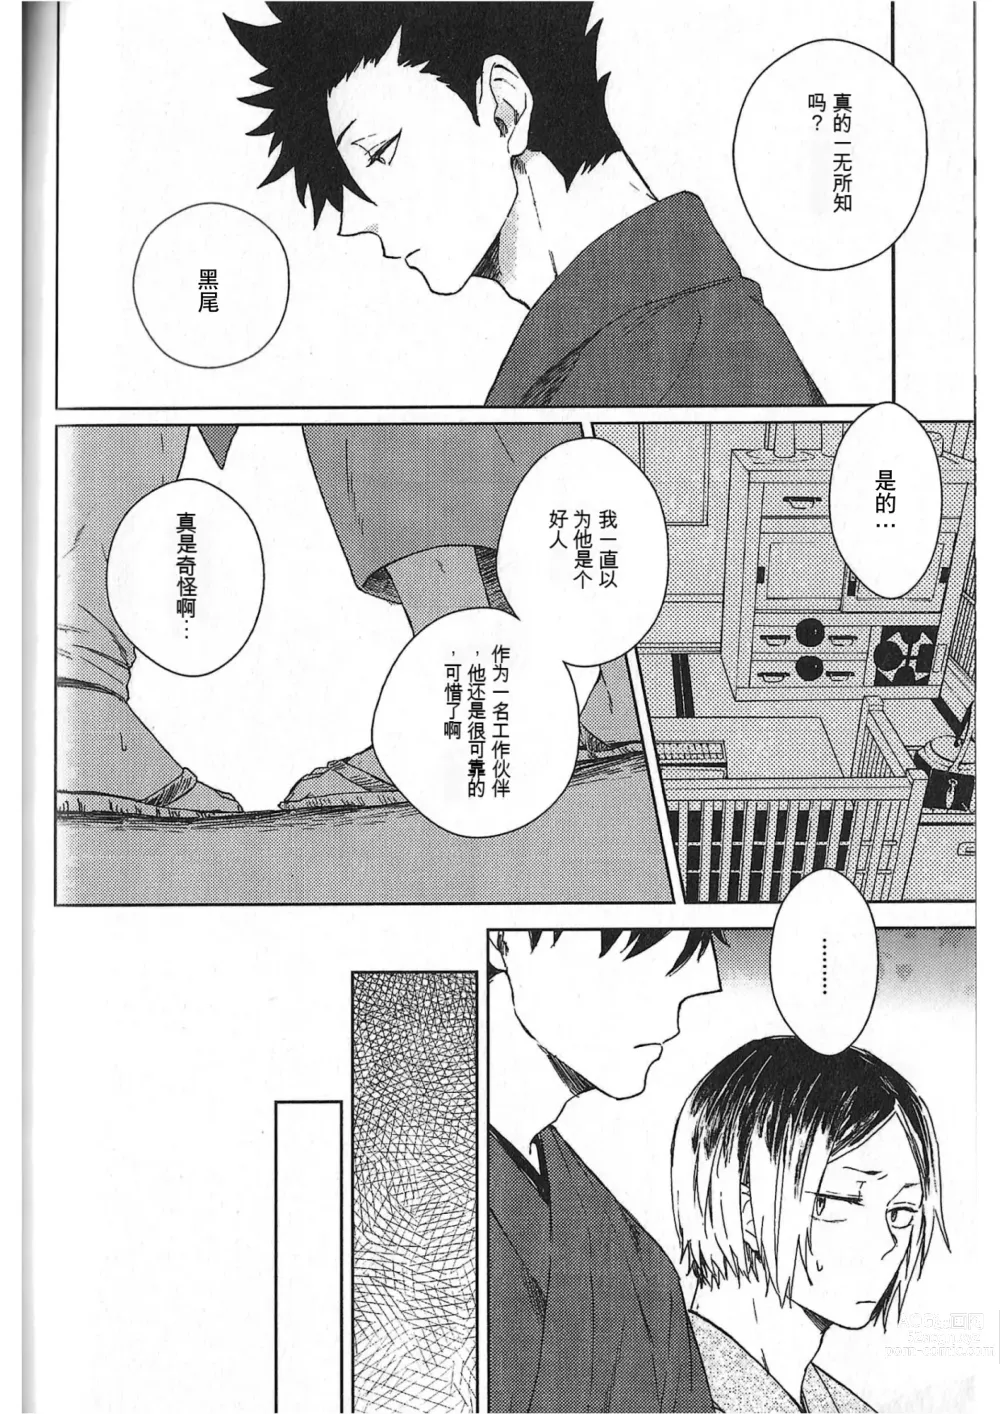 Page 7 of doujinshi 破晓之枭后篇